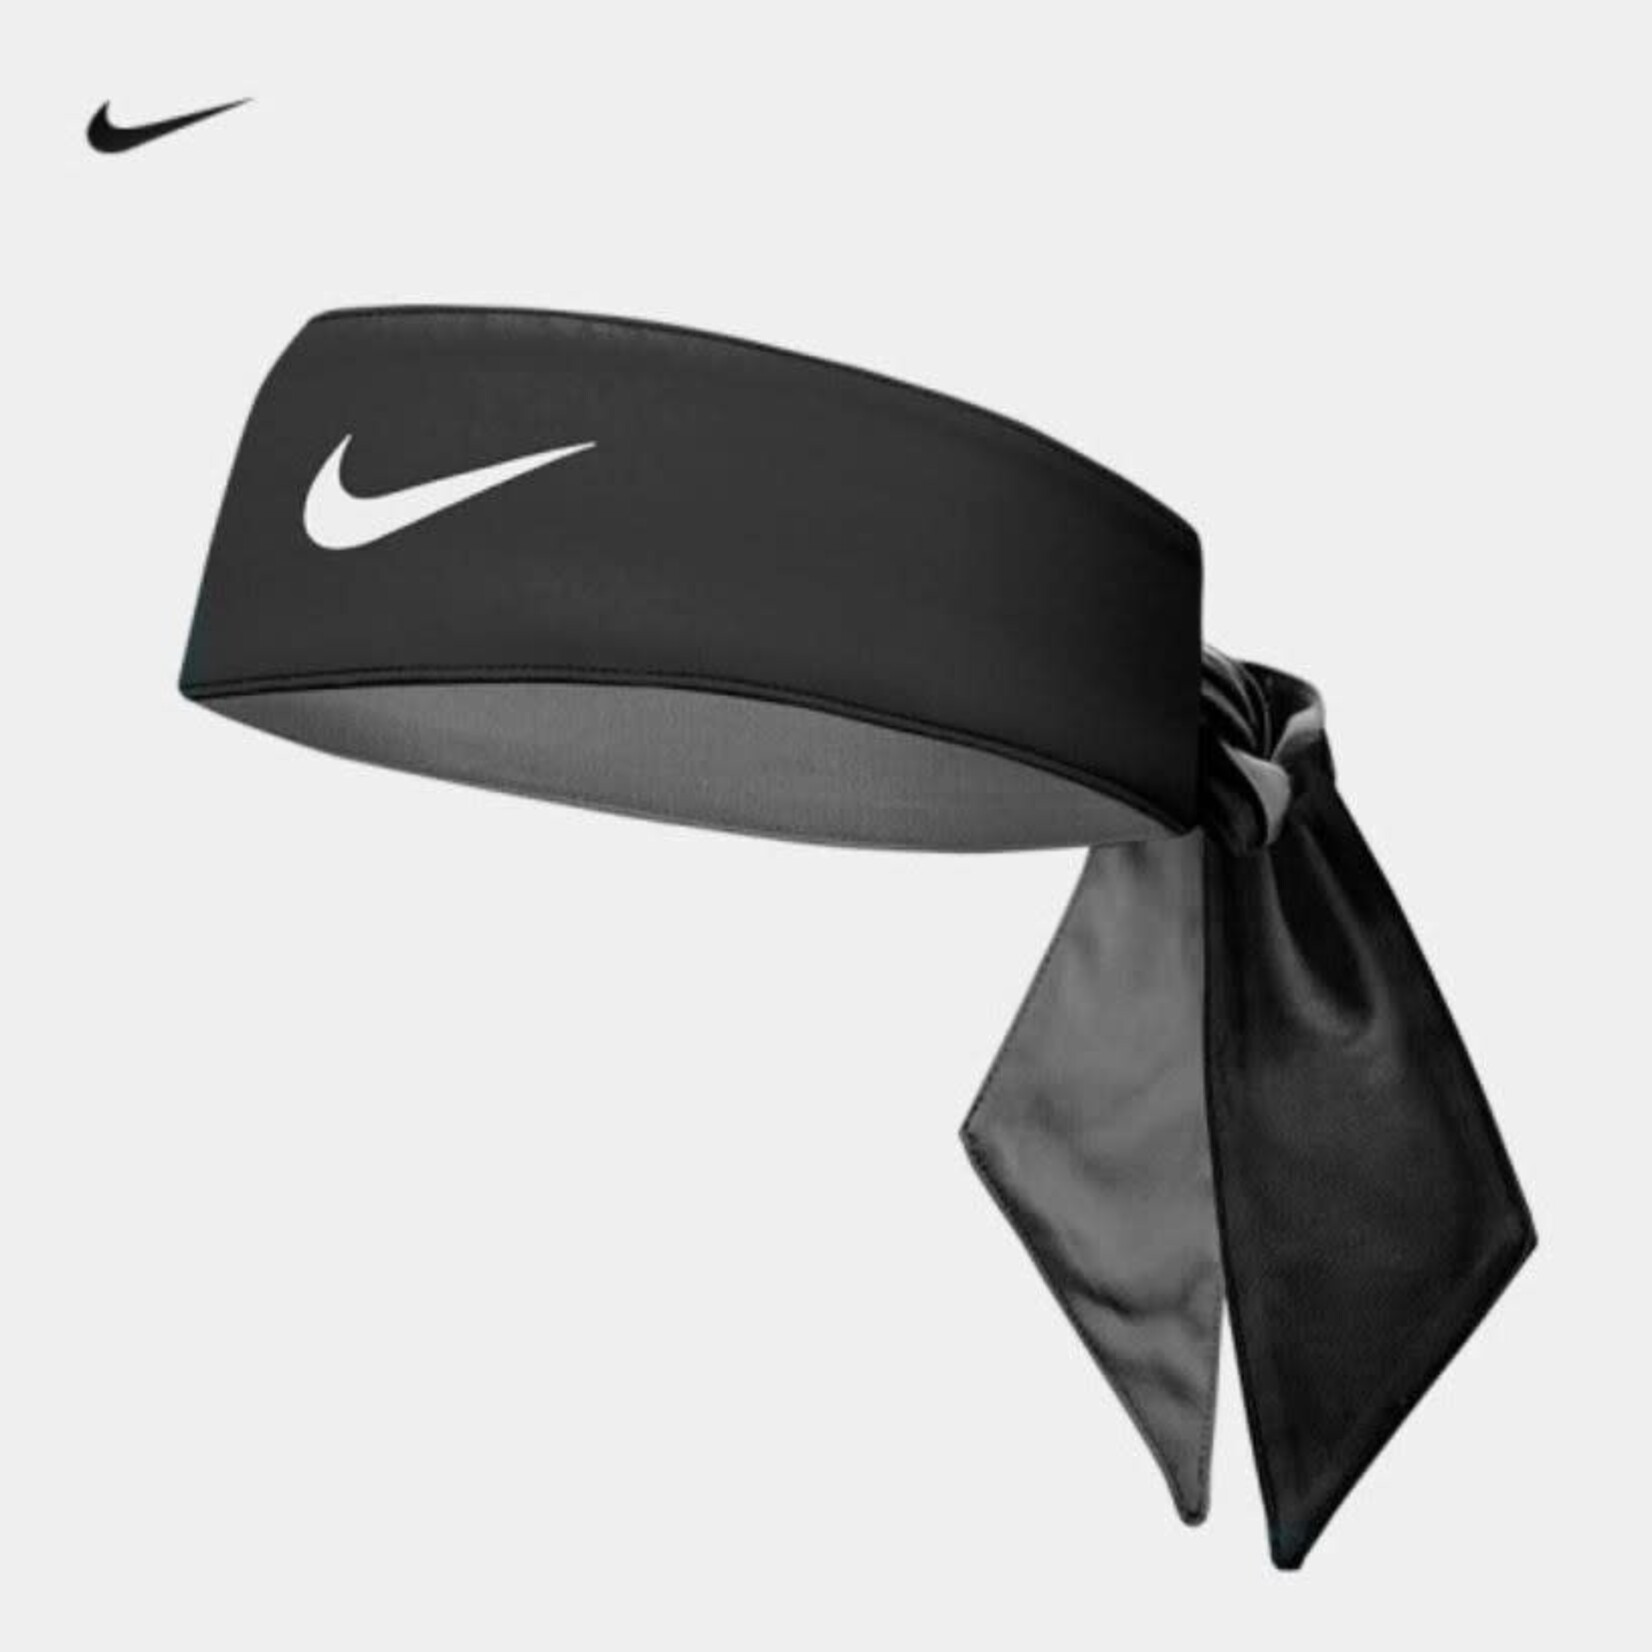 Nike Cooling Head Tie - Black/Grey/White